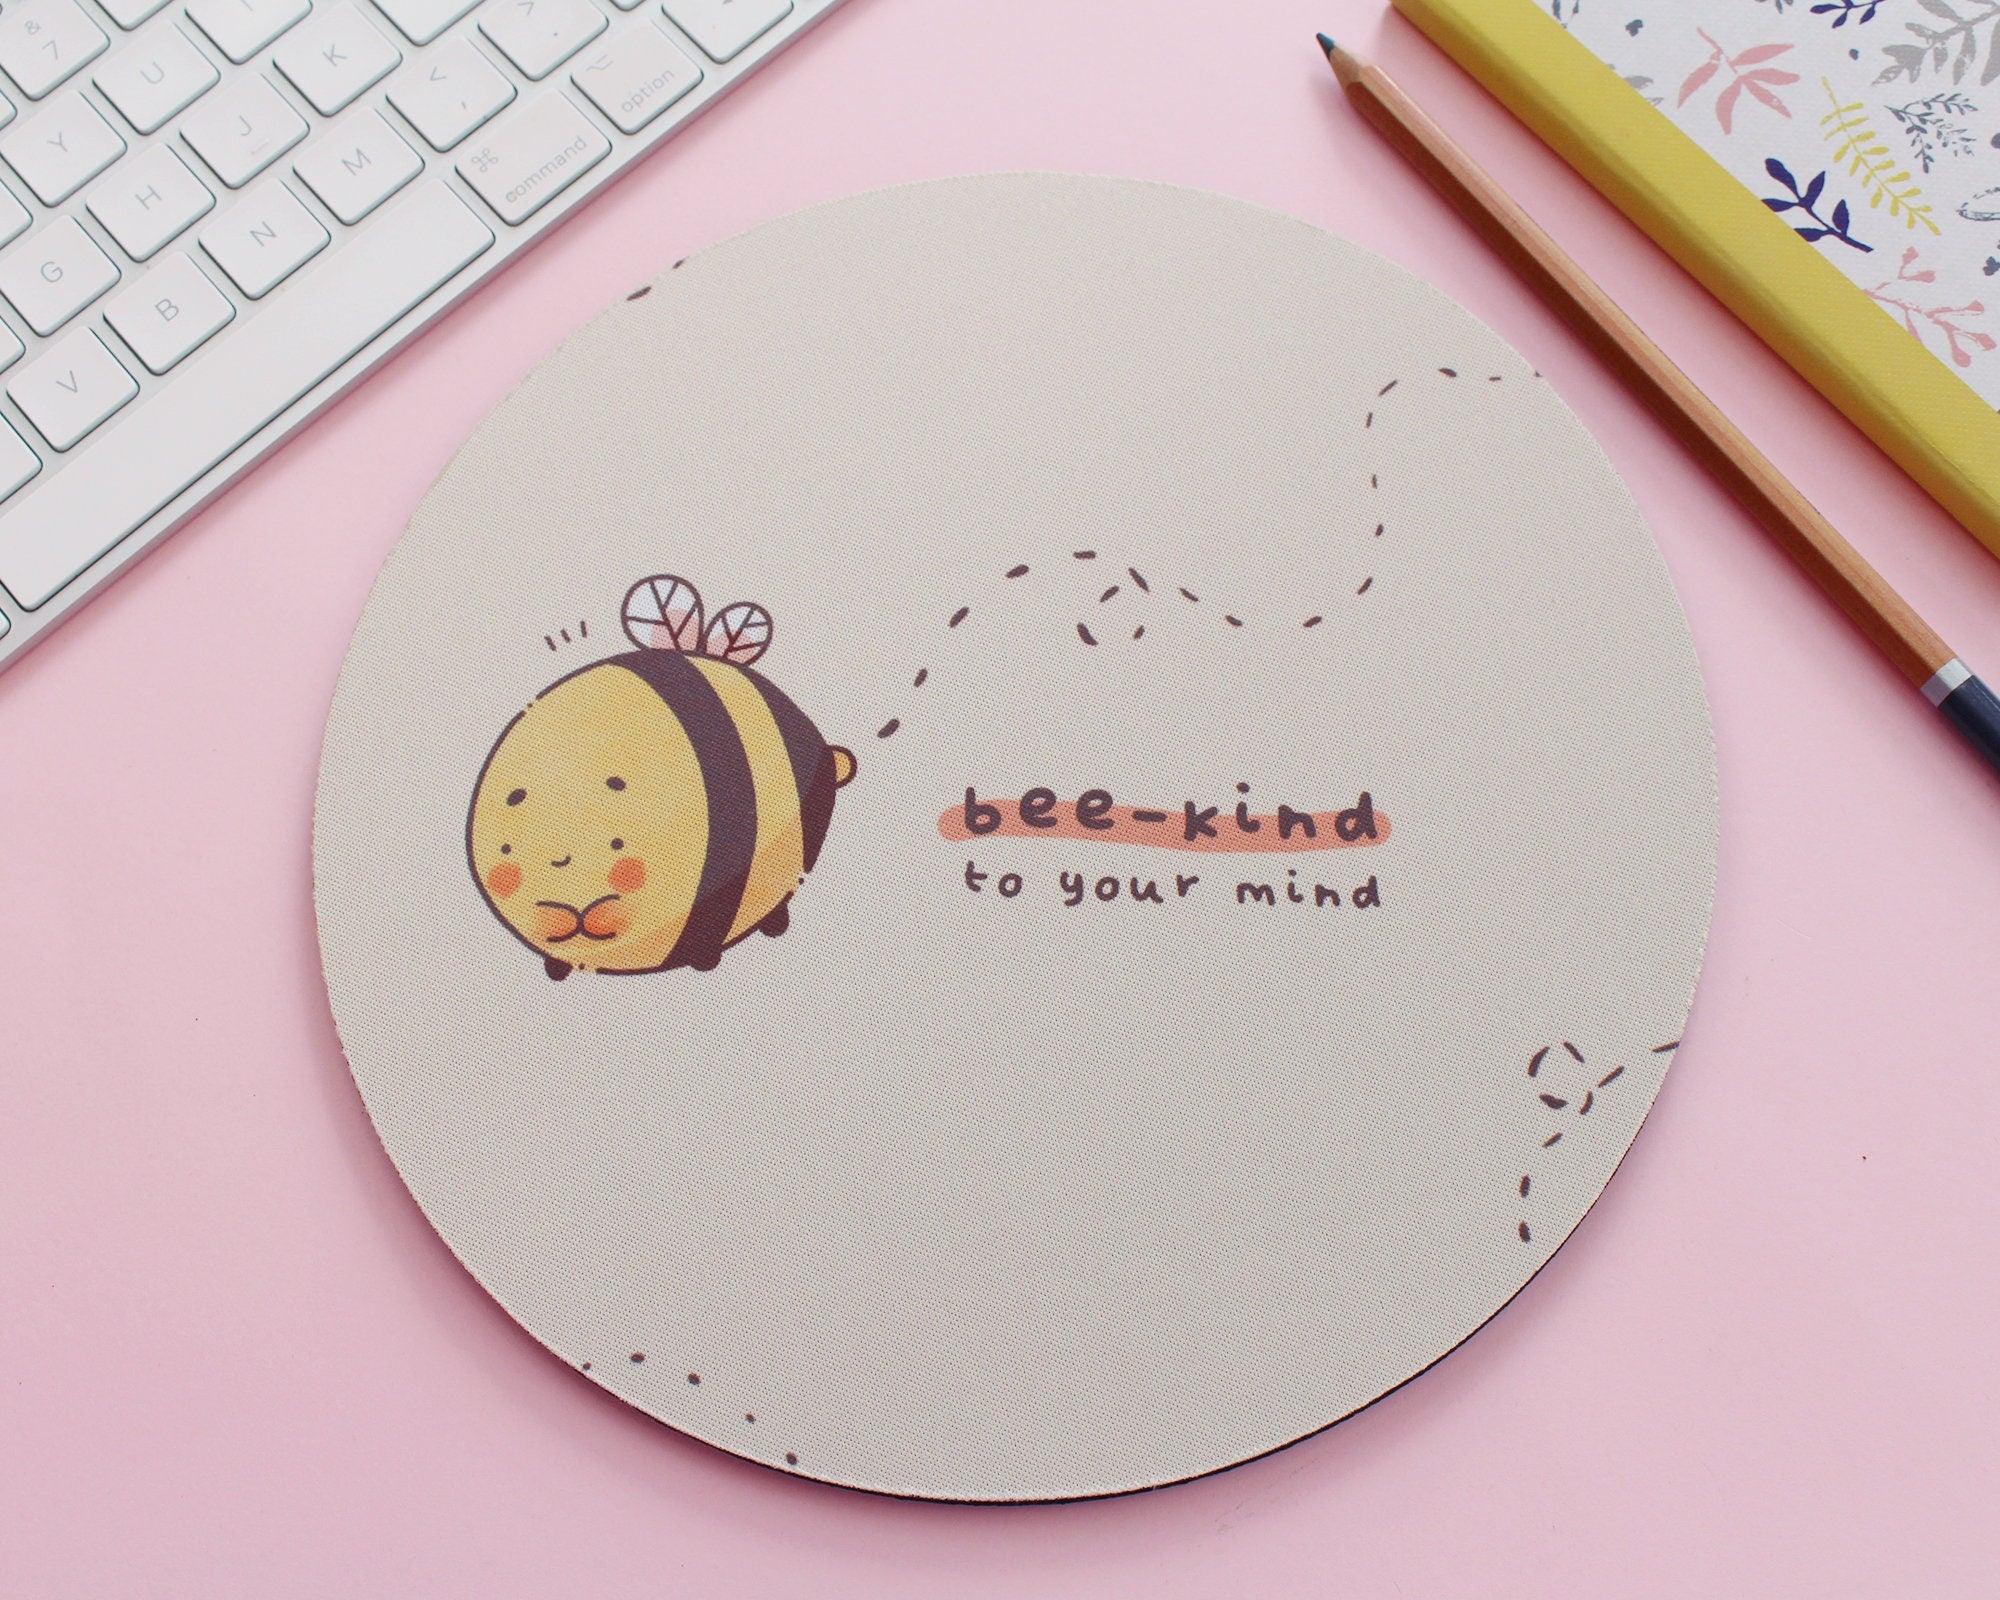 Kawaii Bumblebutt Mouse Mat - Hand-printed original design to brighten up your workspace.